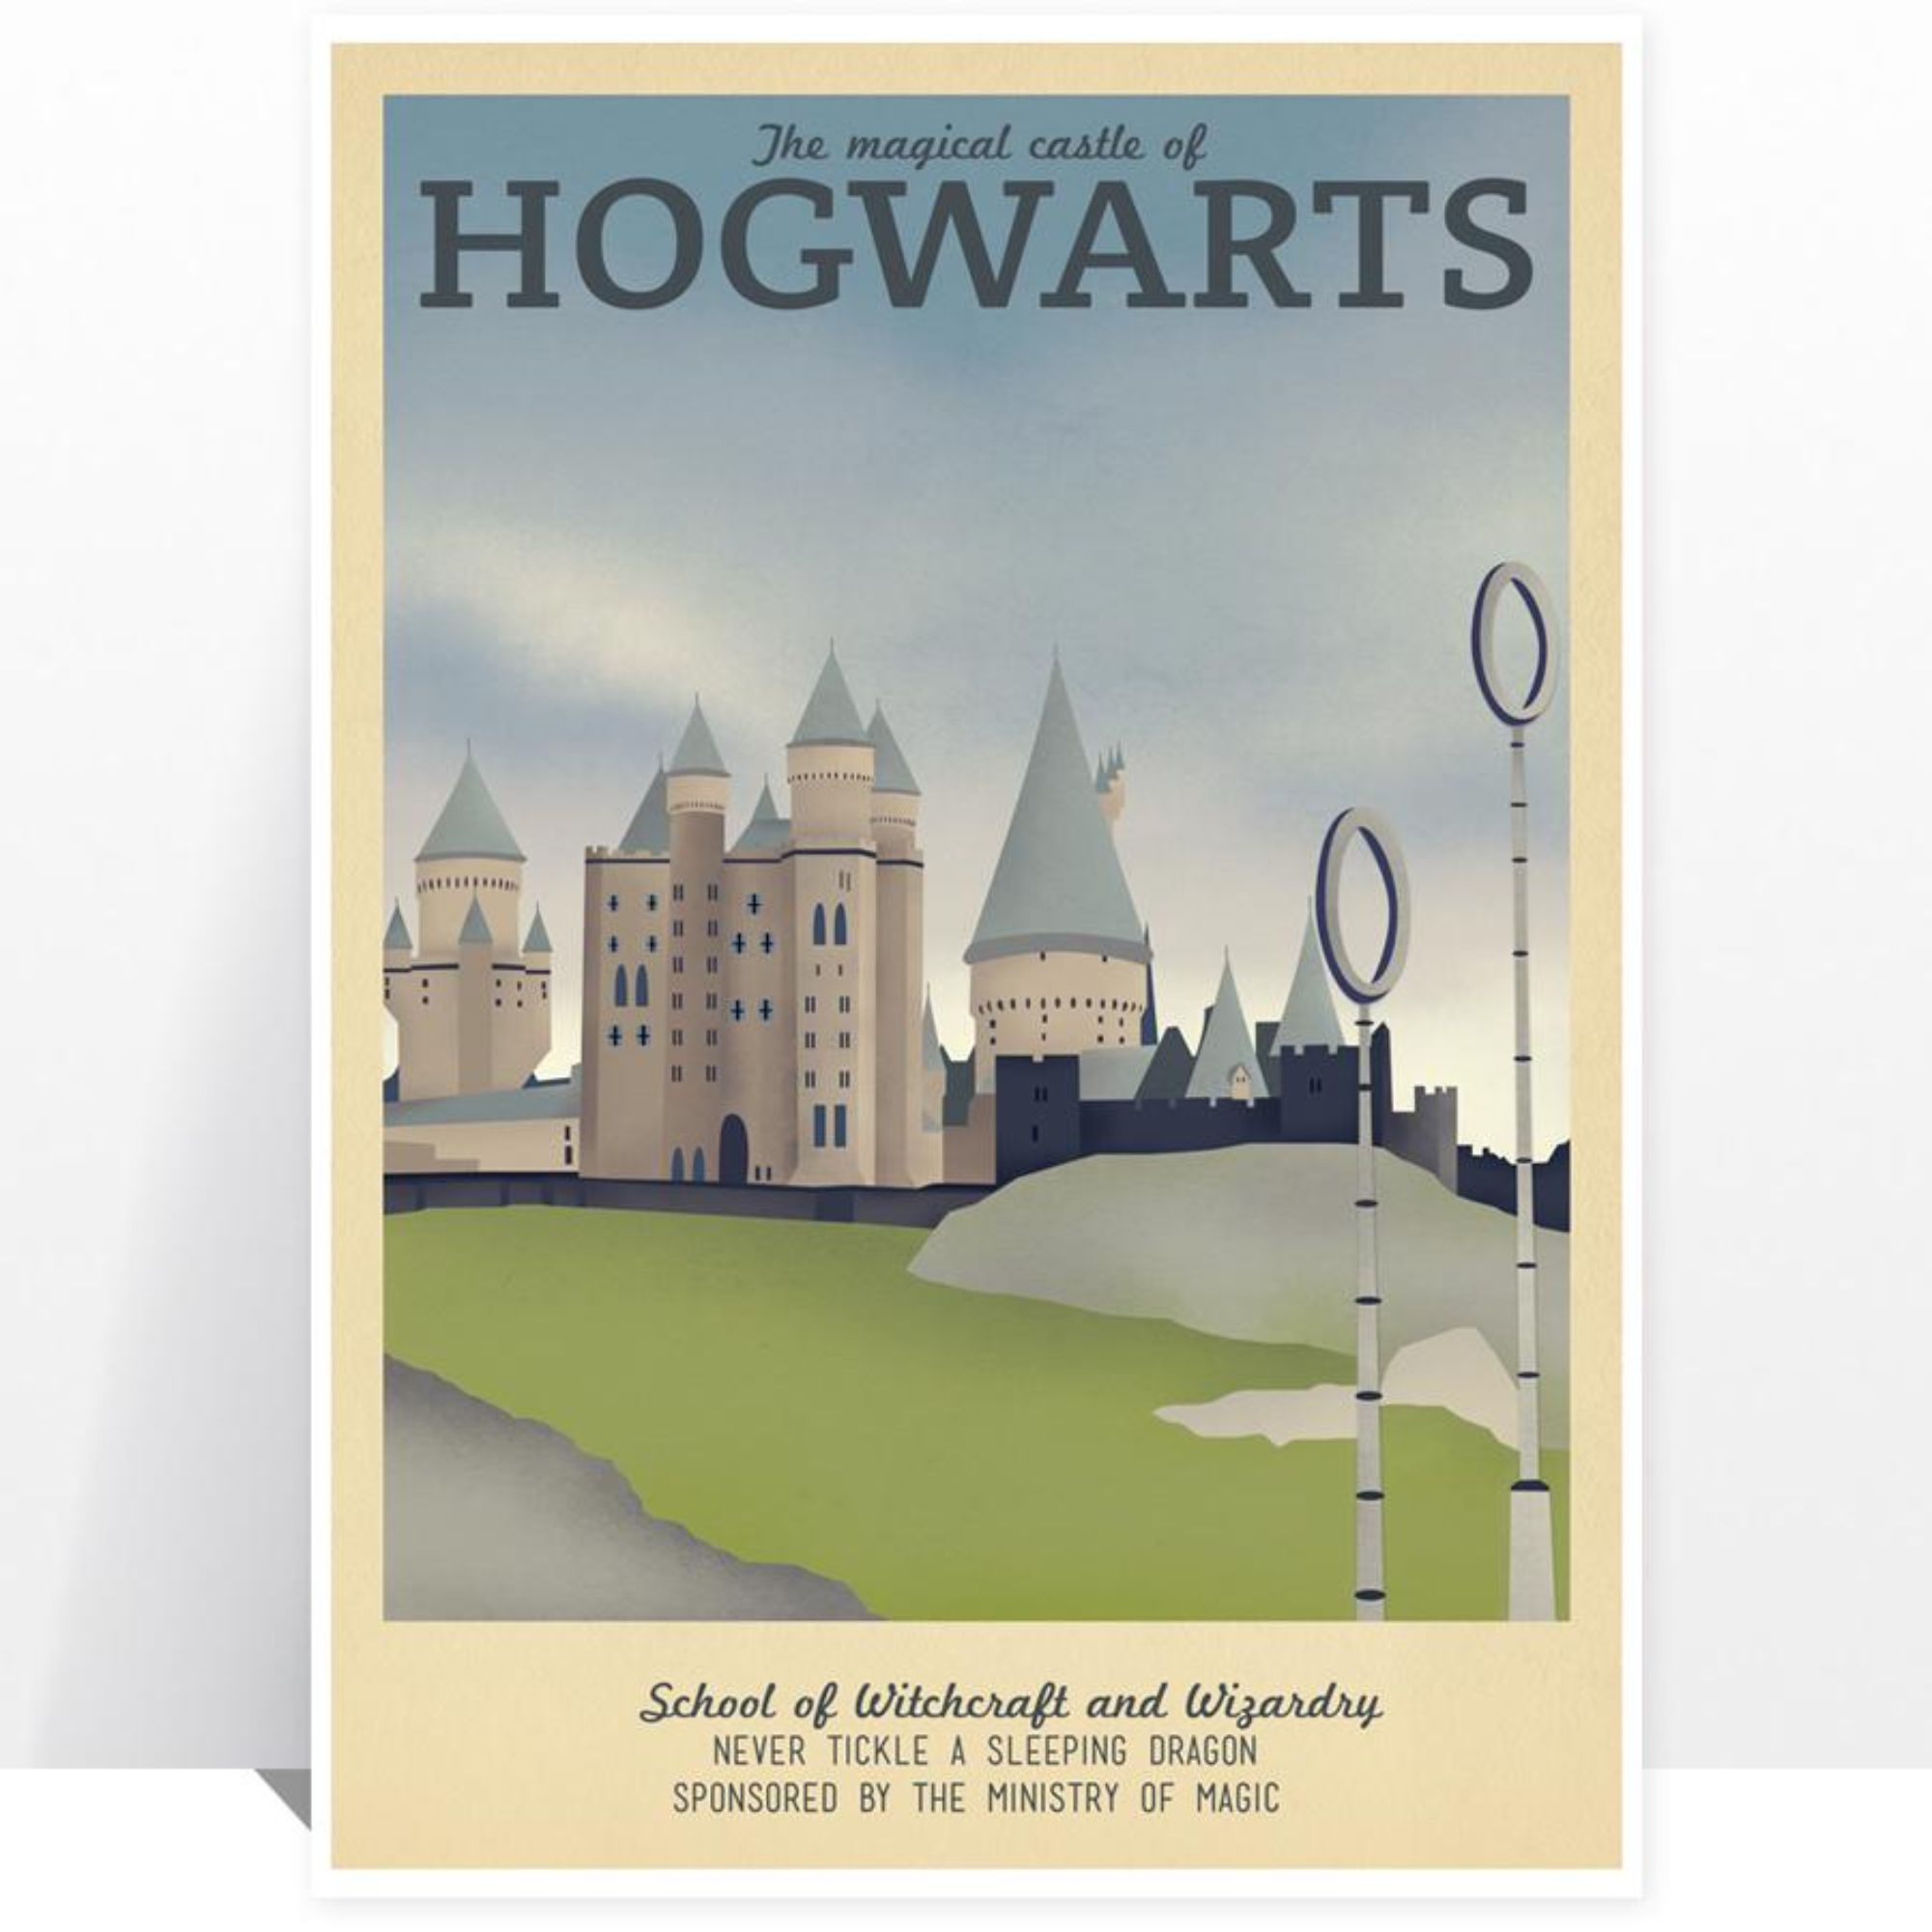 https://eagleazshop.com/wp-content/uploads/2021/11/Retro-Travel-Poster-Harry-Potter-Hogwarts_75996834-1.jpg